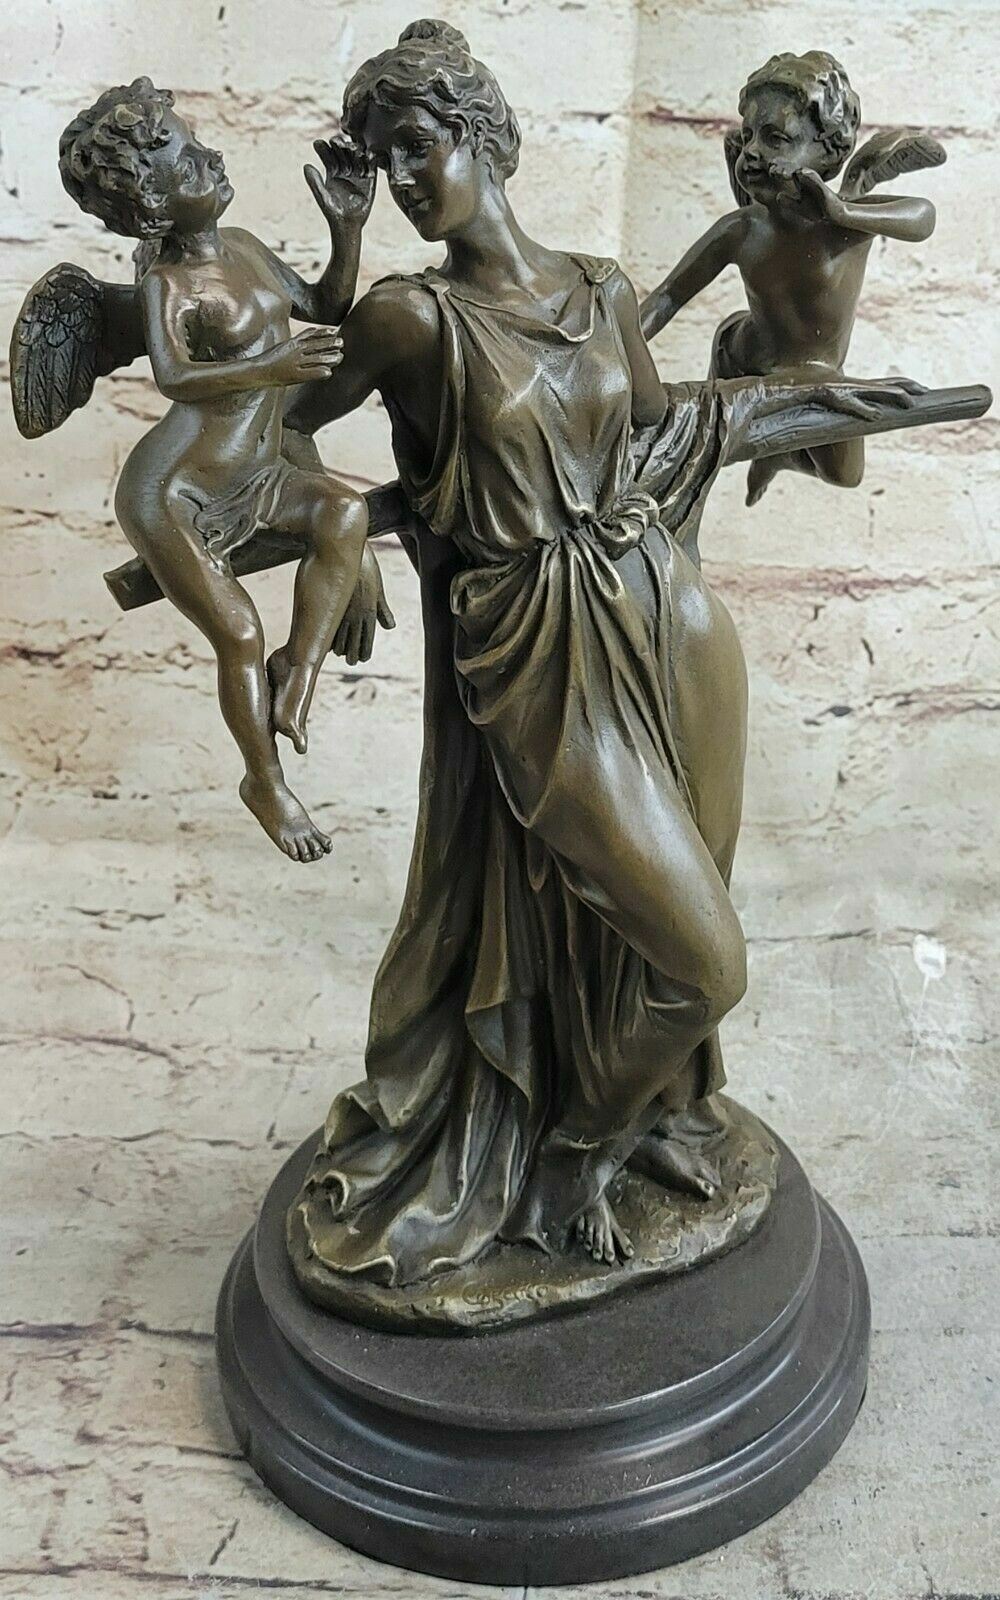 Signed Original Cegazo Depicts Woman and 2 Cherub Bronze Sculpture Statue Figure